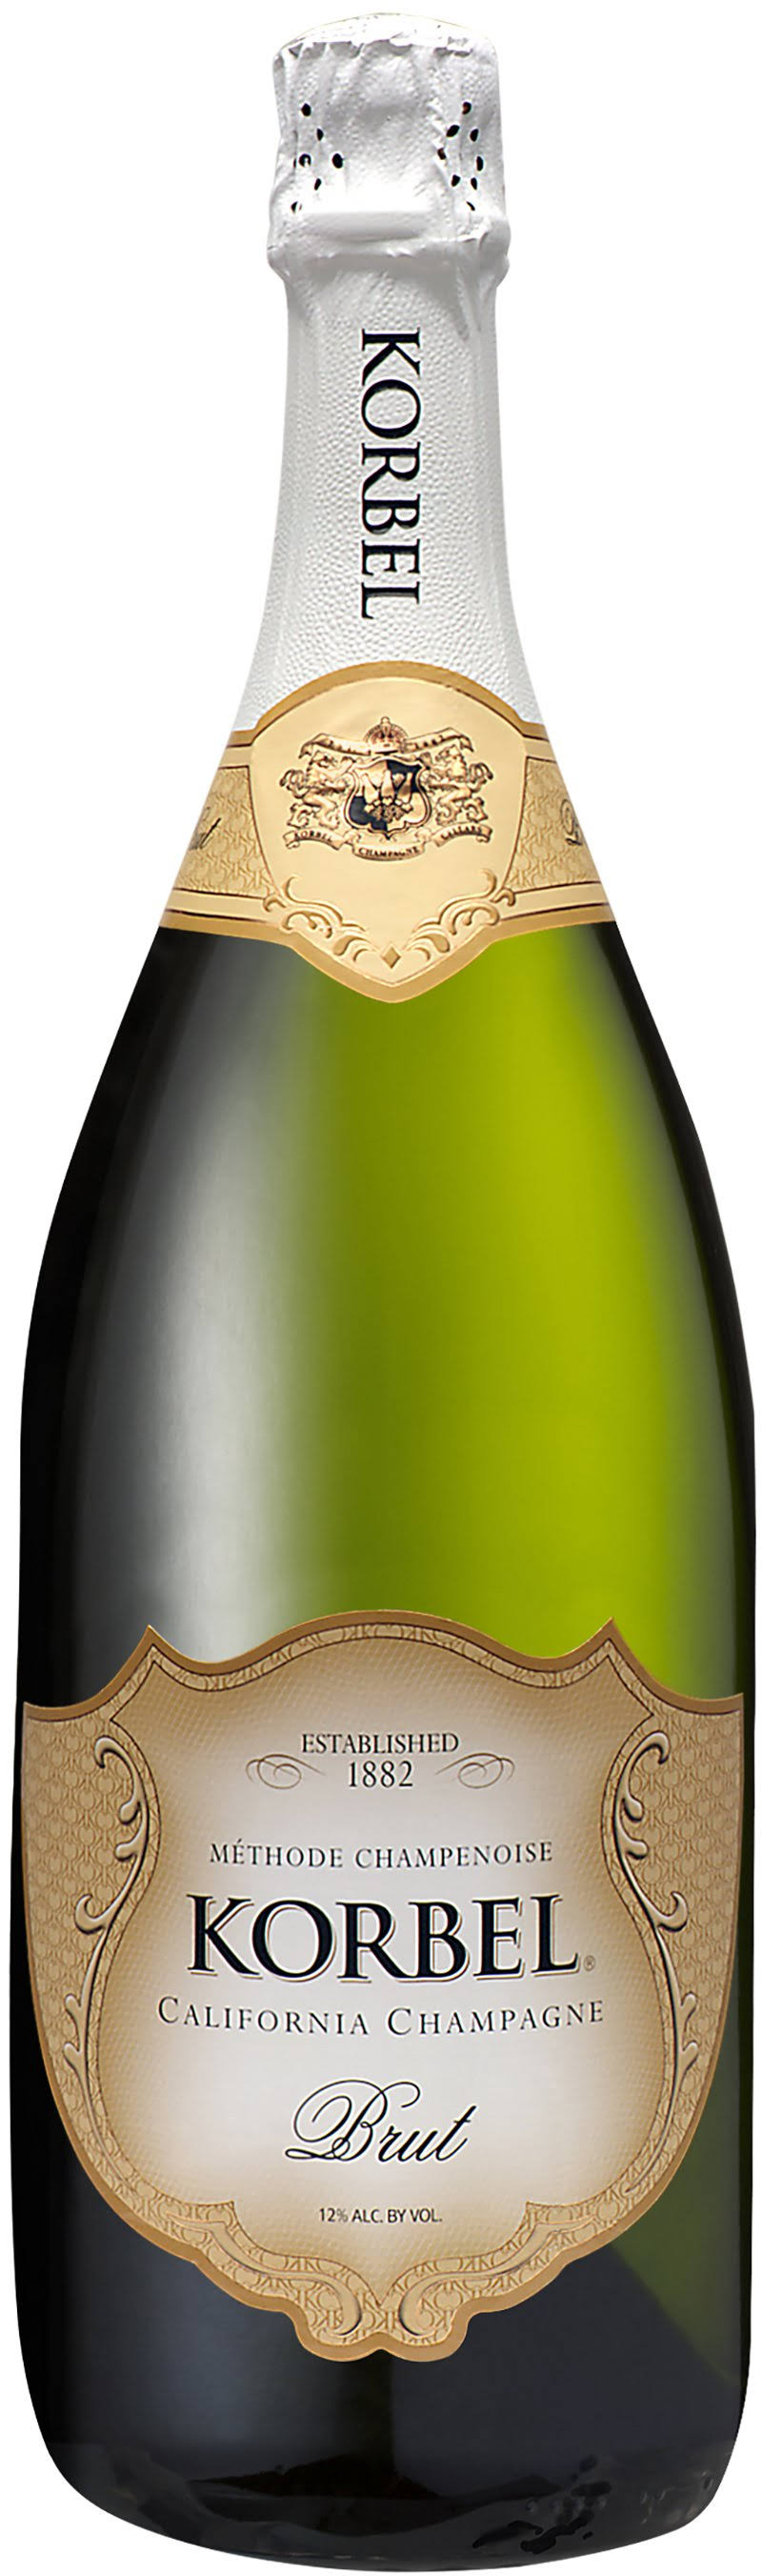 Korbel Brut Champagne - California